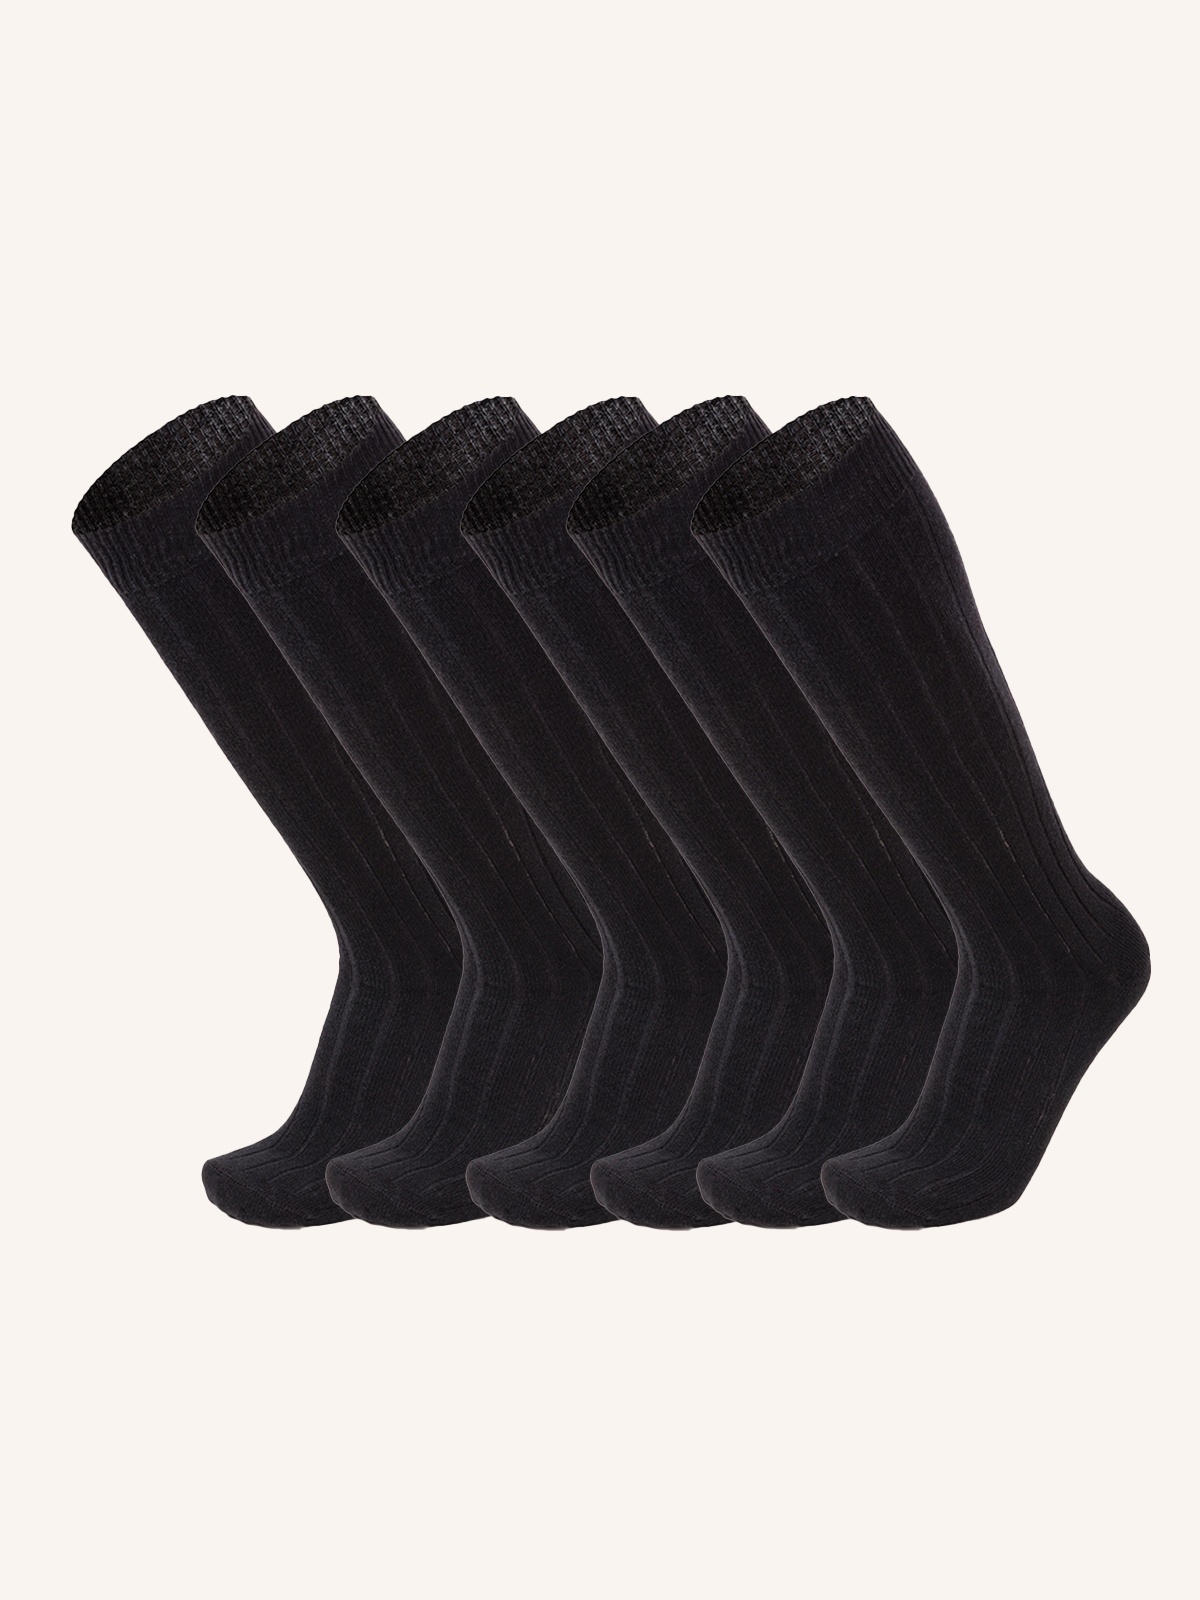 Long Wool Socks for Men | Plain Color | Pack of 6 pairs | Woolife UL